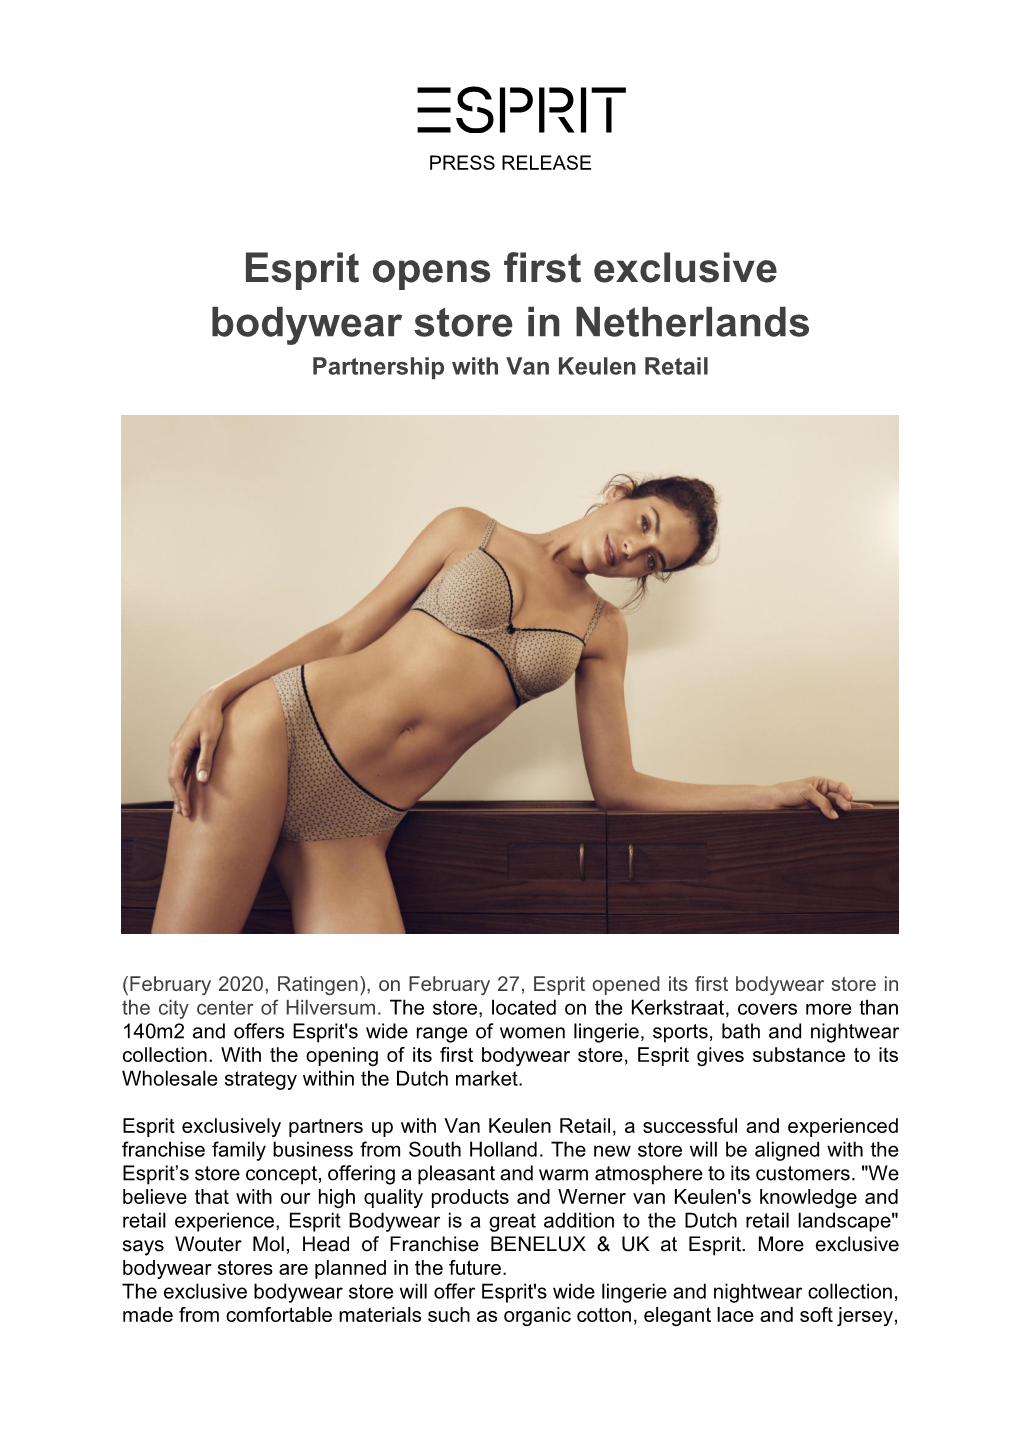 Esprit Opens First Exclusive Bodywear Store in Netherlands Partnership with Van Keulen Retail